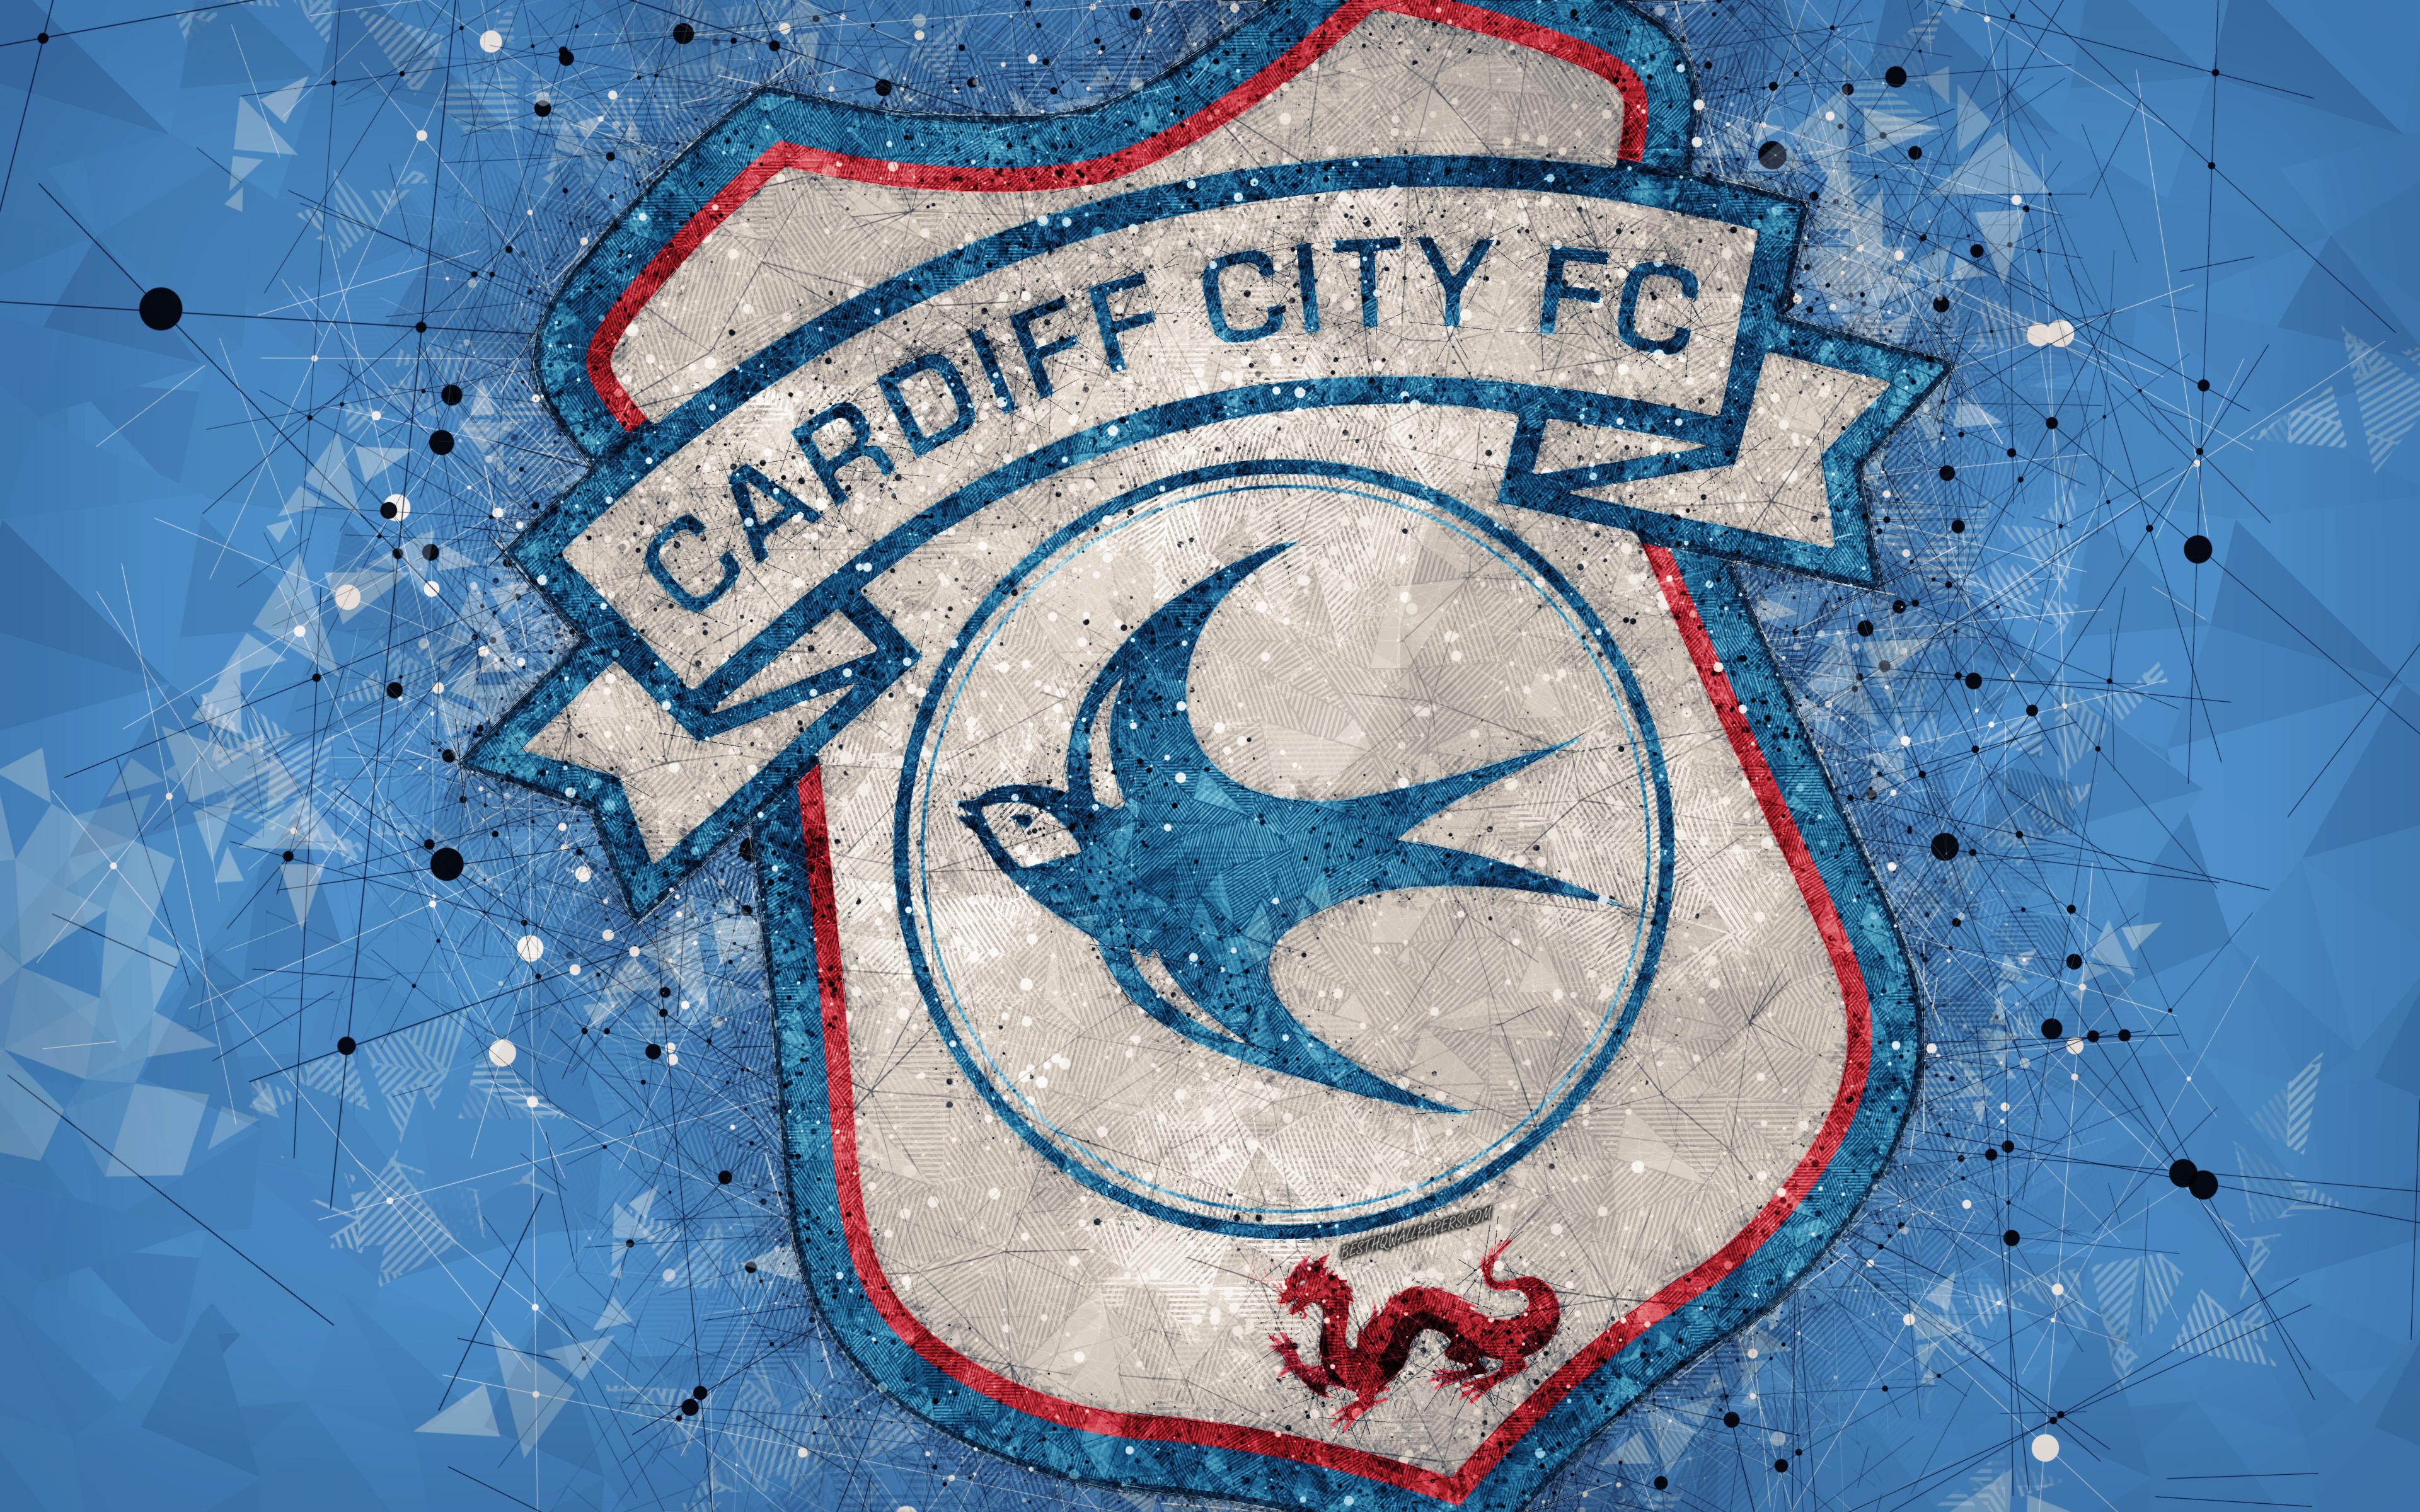 Download wallpaper Cardiff City FC, 4k, geometric art, logo, blue